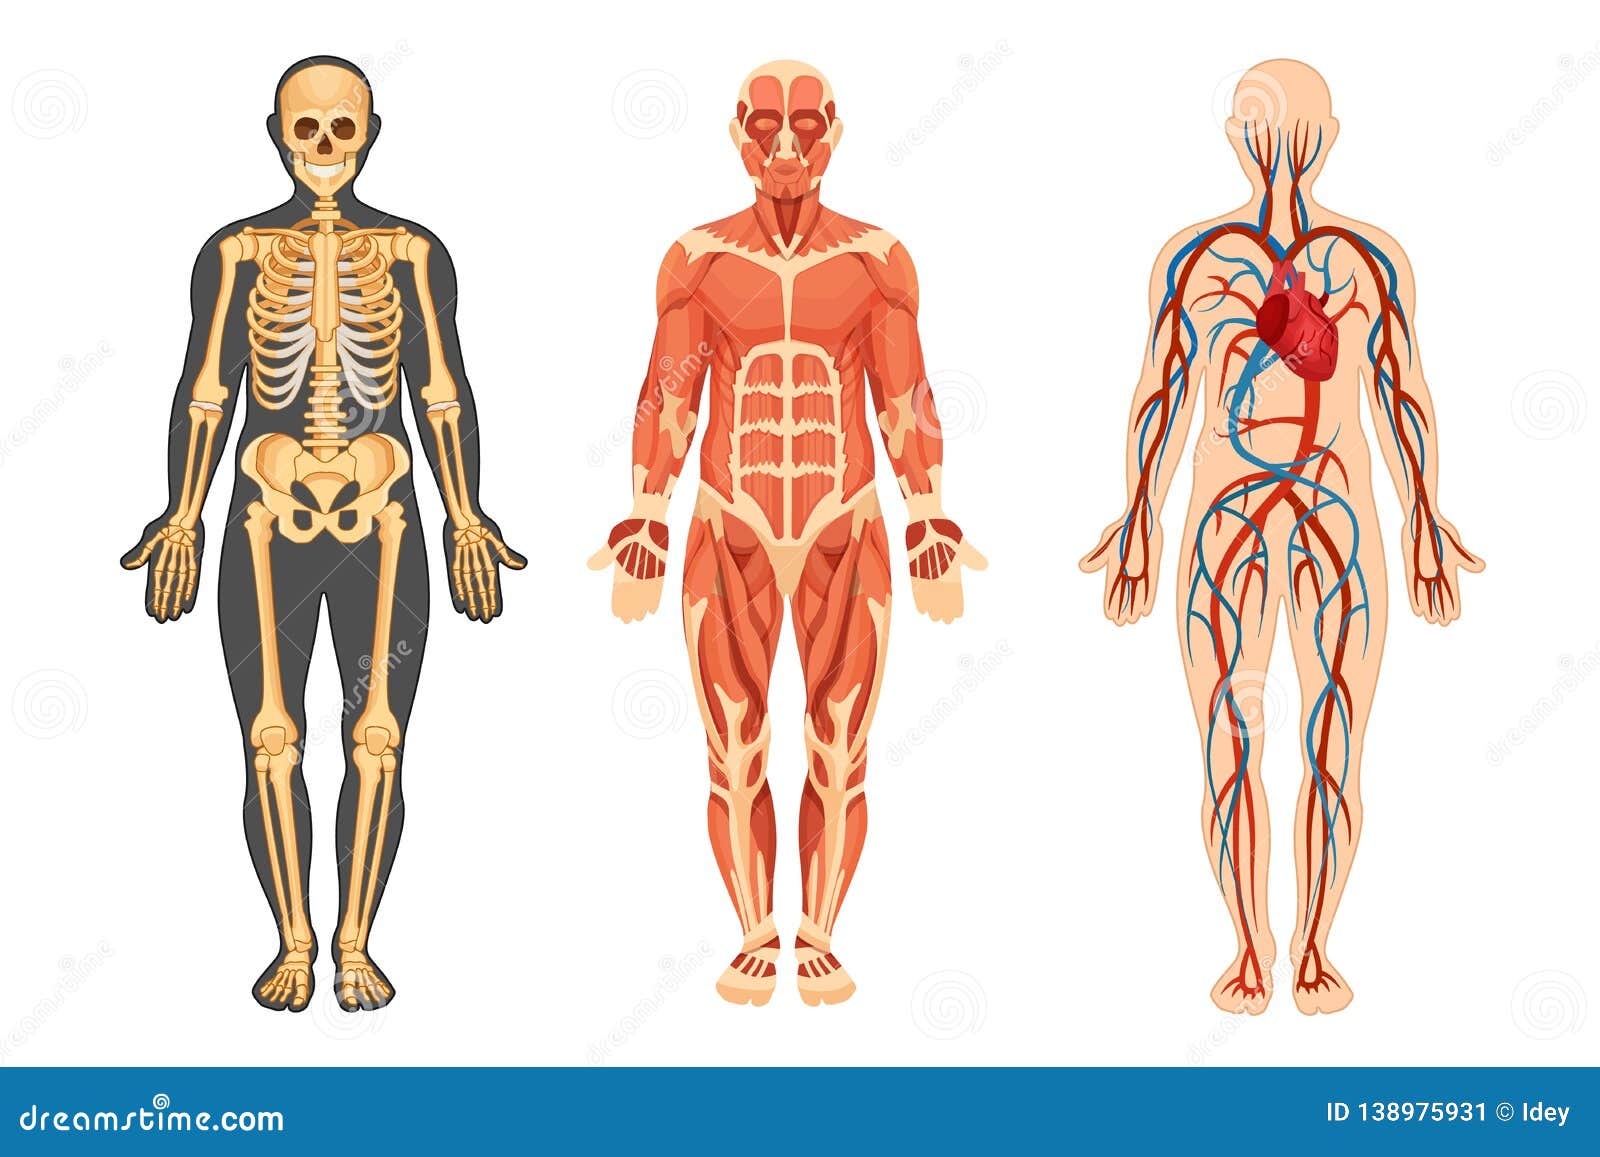 Human structure. Скелет и мышечная система человека. Анатомия человека скелет и мышцы. Скелет человека с мышцами и органами. Скелет человека с мышцами и нервами.